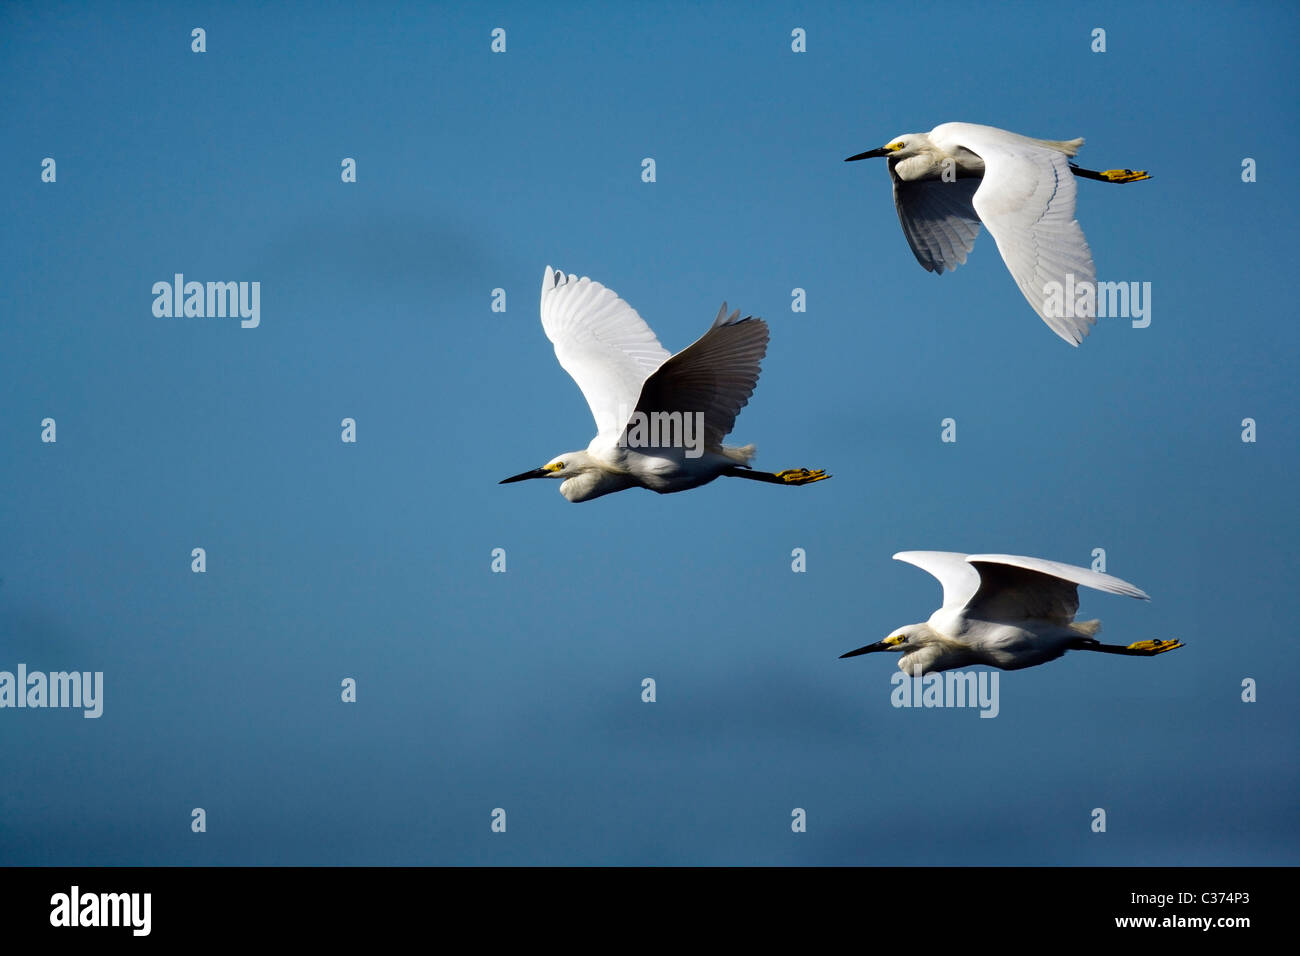 Snowy Reiher im Flug (3 Bild Digital Composite) - j.n. Ding Darling National Wildlife Refuge - Sanibel Island, Florida USA Stockfoto